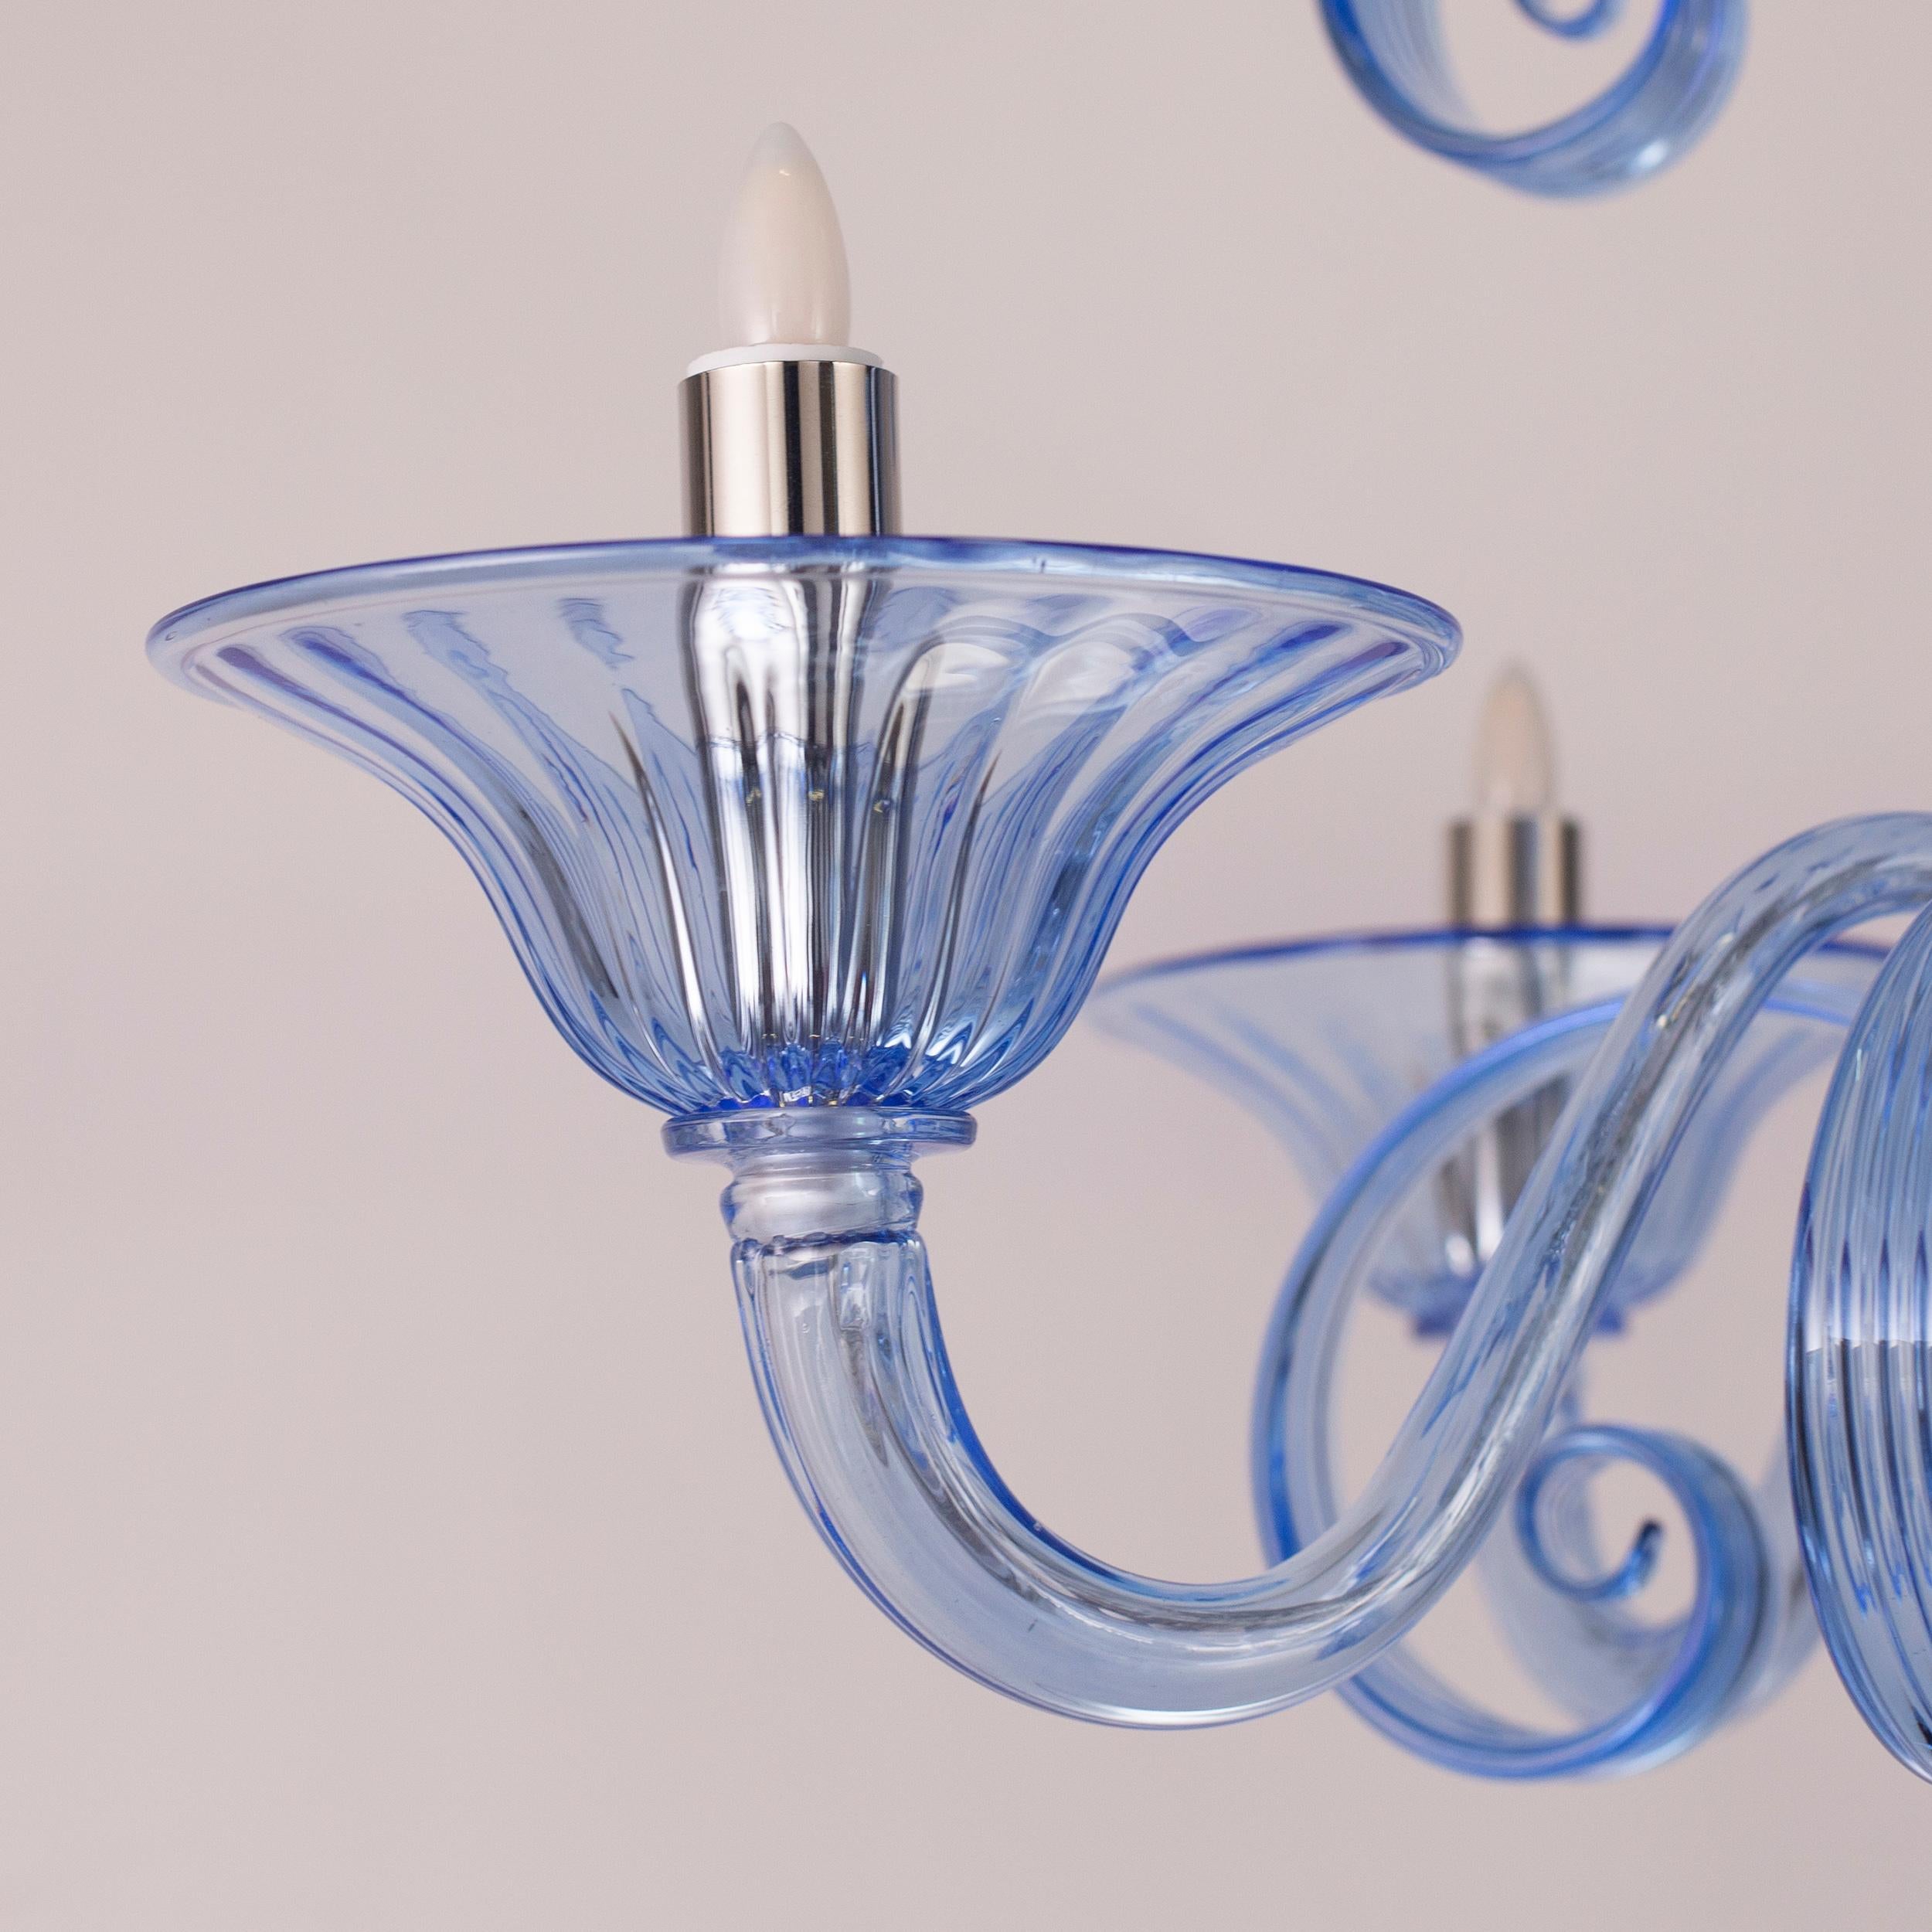 Contemporary Capriccio Chandelier 5 Arms Blue Artistic Murano Glass by Multiforme For Sale